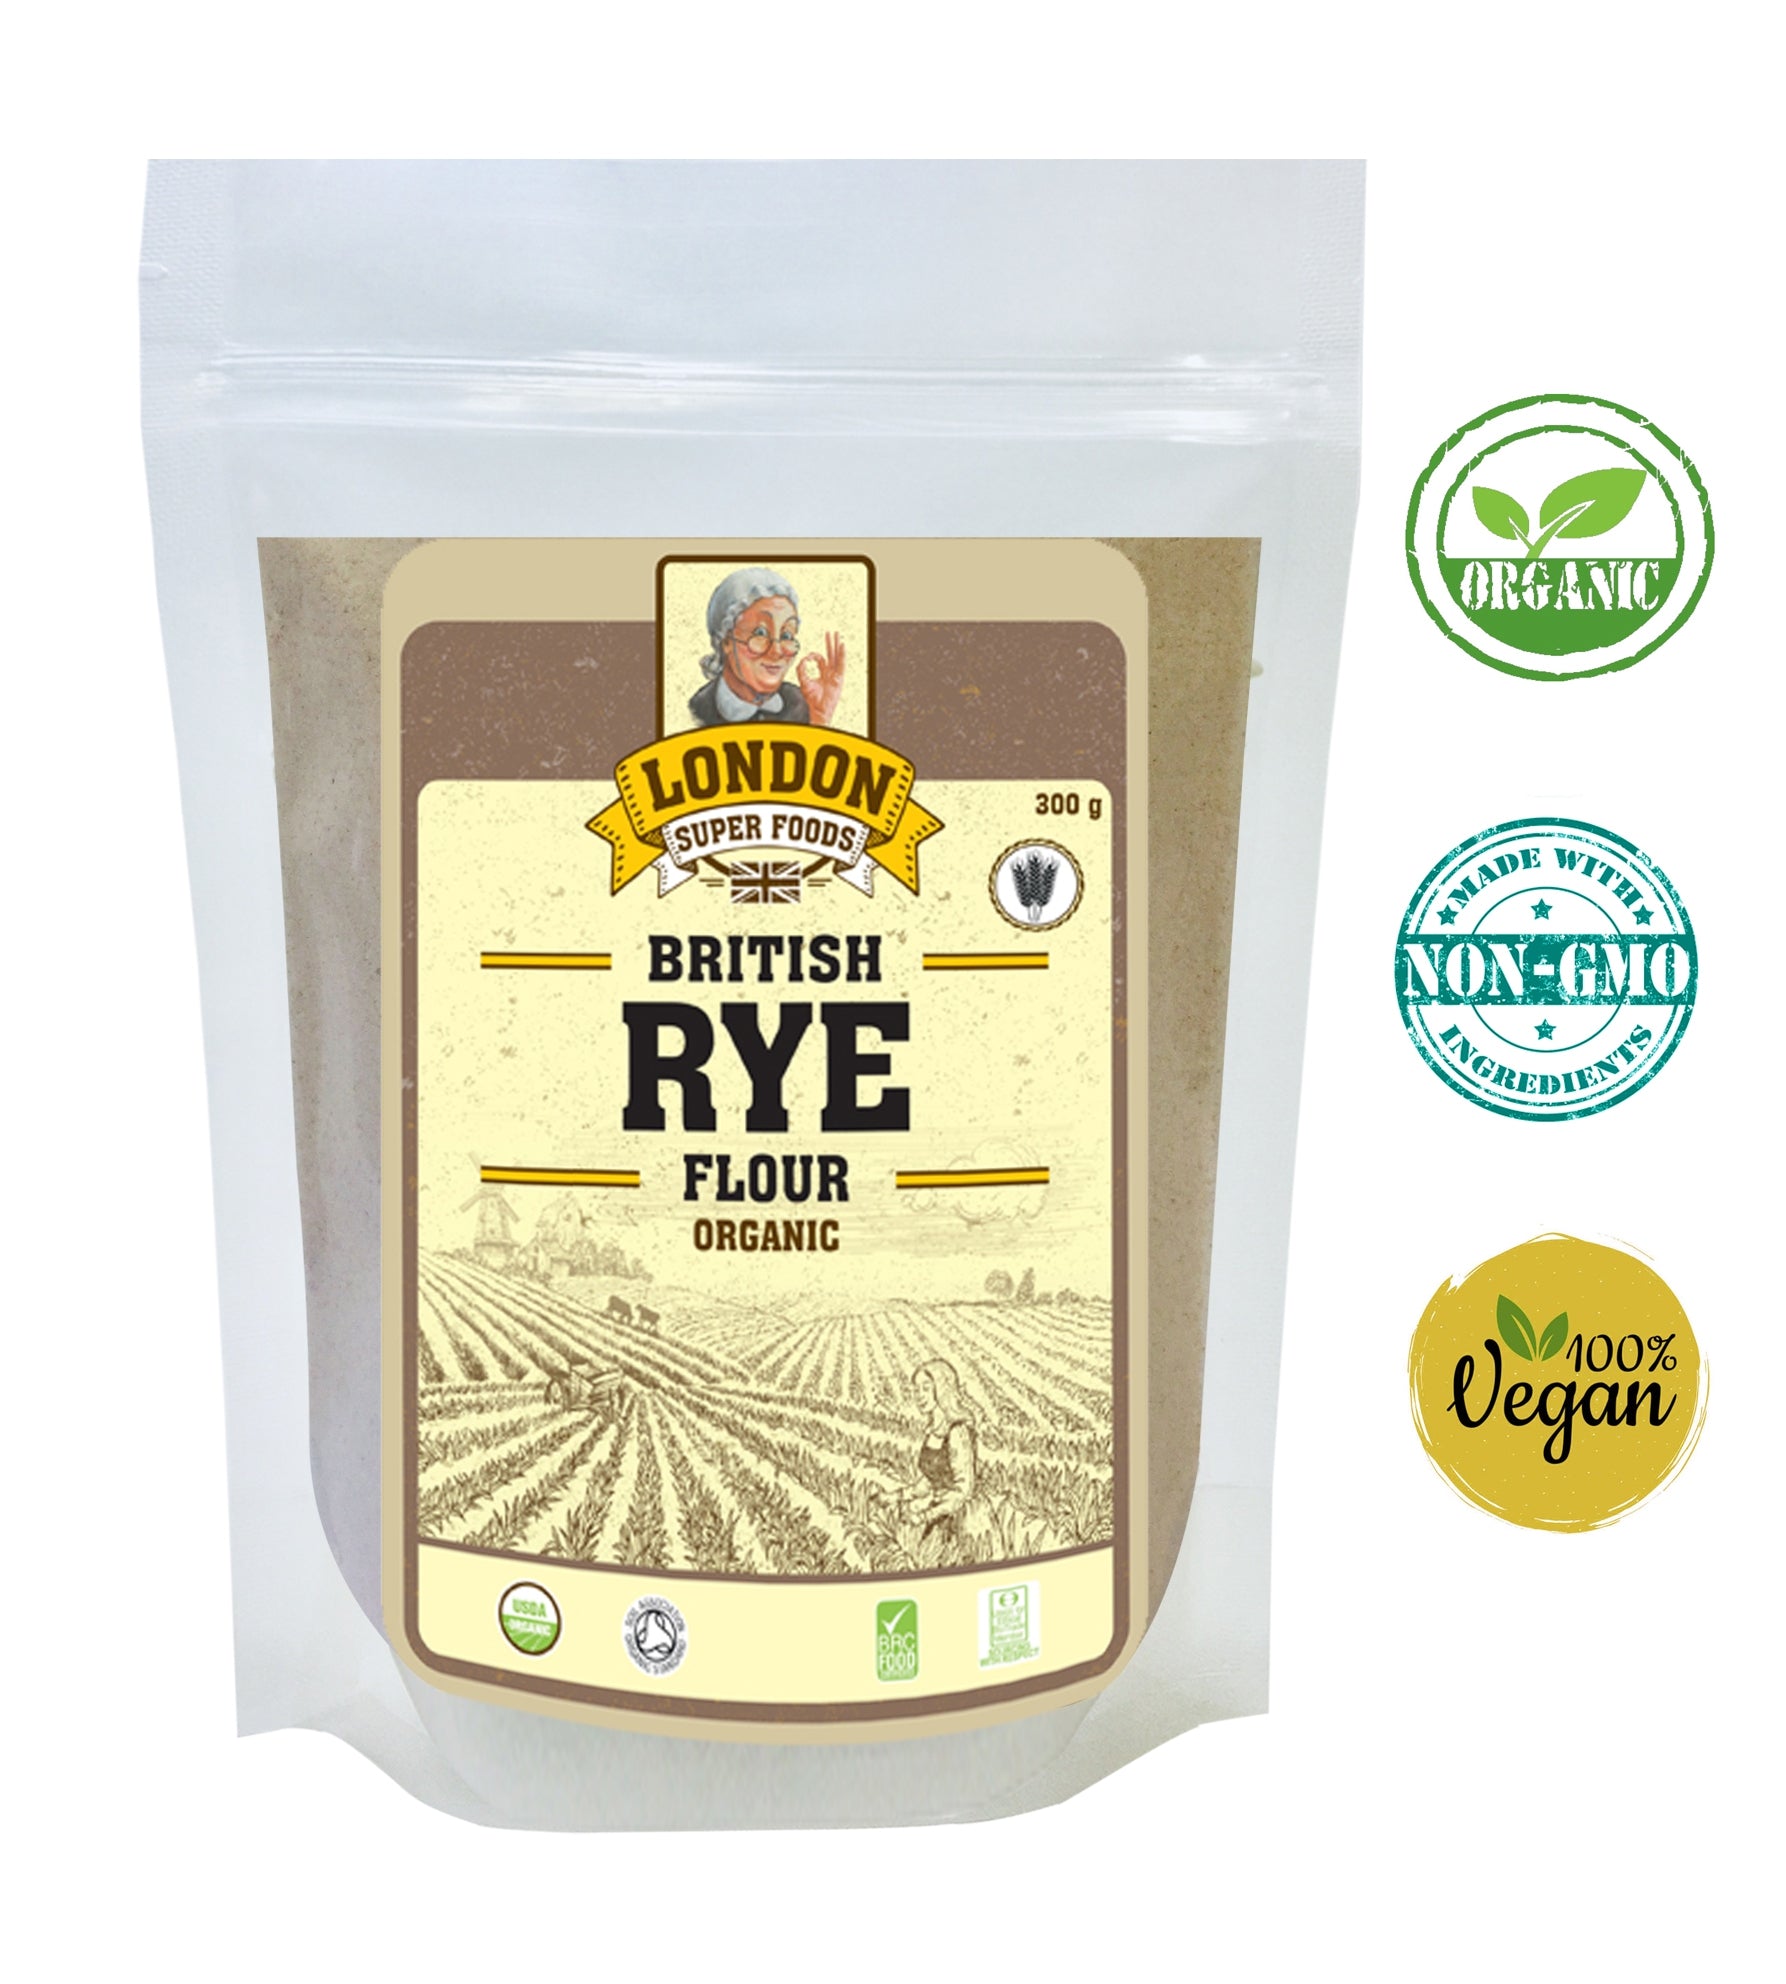 LONDON SUPER FOODS Organic British Rye Flour, 300g